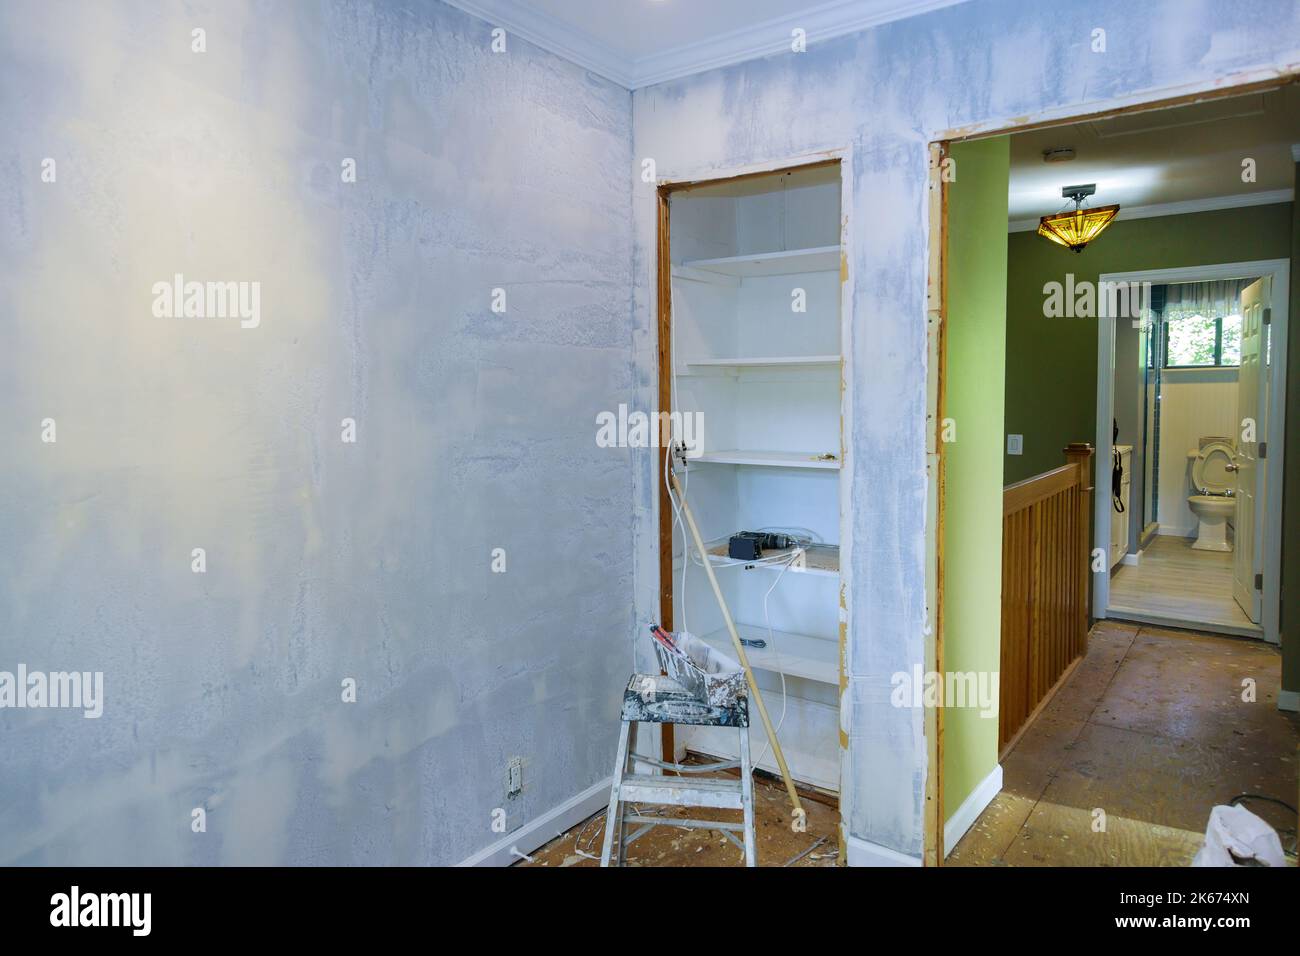 Renovating home renovating an old apartmen renovating plasterboard walls drywalls for gypsum drywall Stock Photo